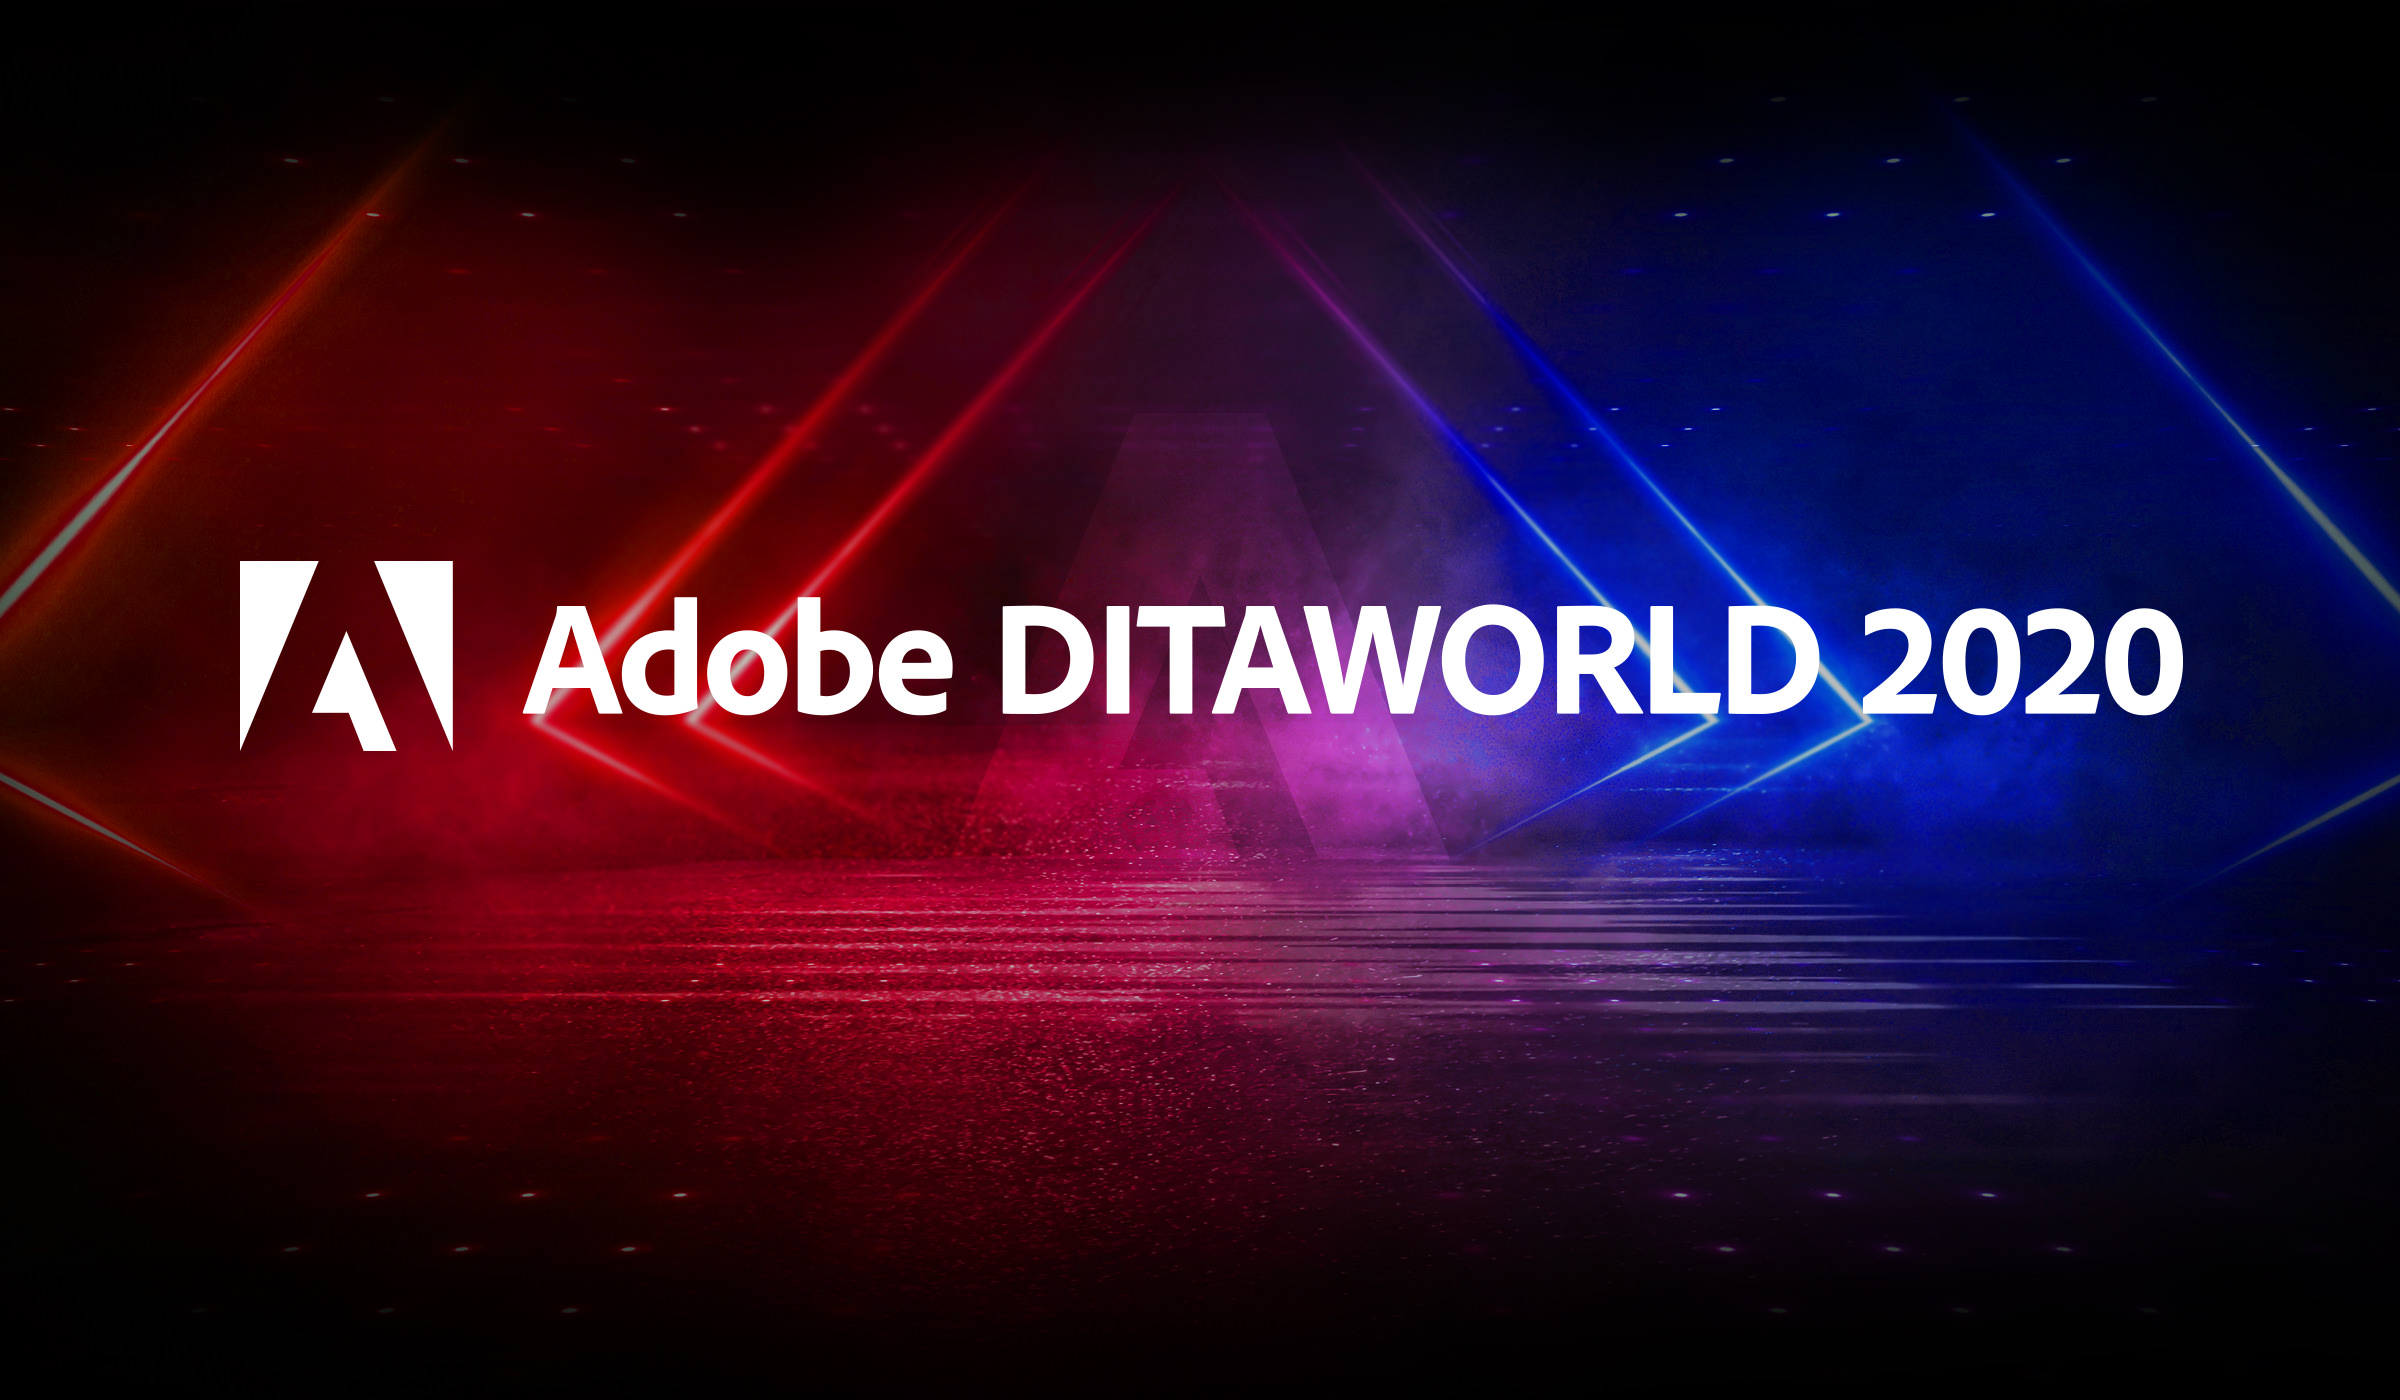 Adobe DITAWORLD logo